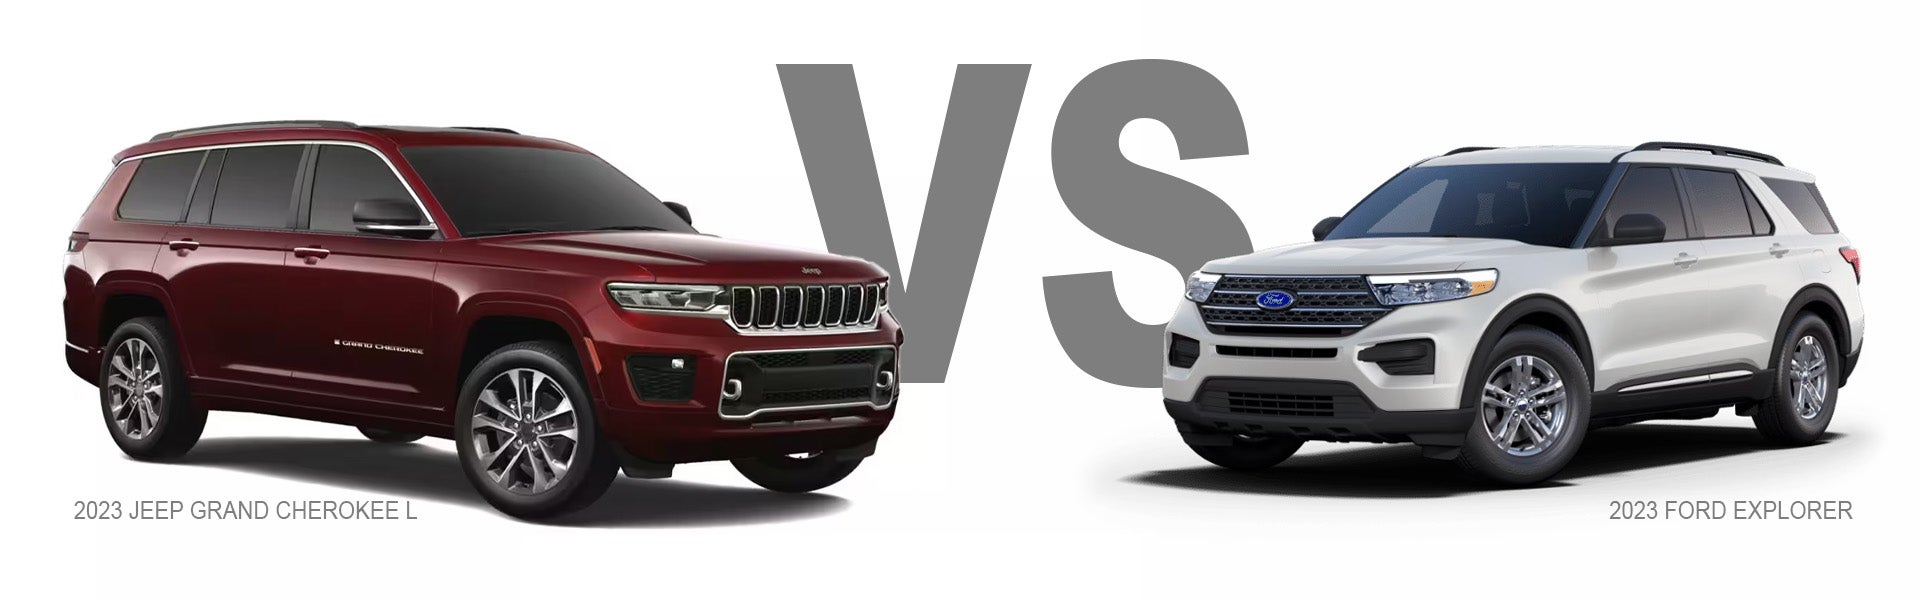 Jeep Grand Cherokee L versus Ford Explorer Full Size SUV Comparisons